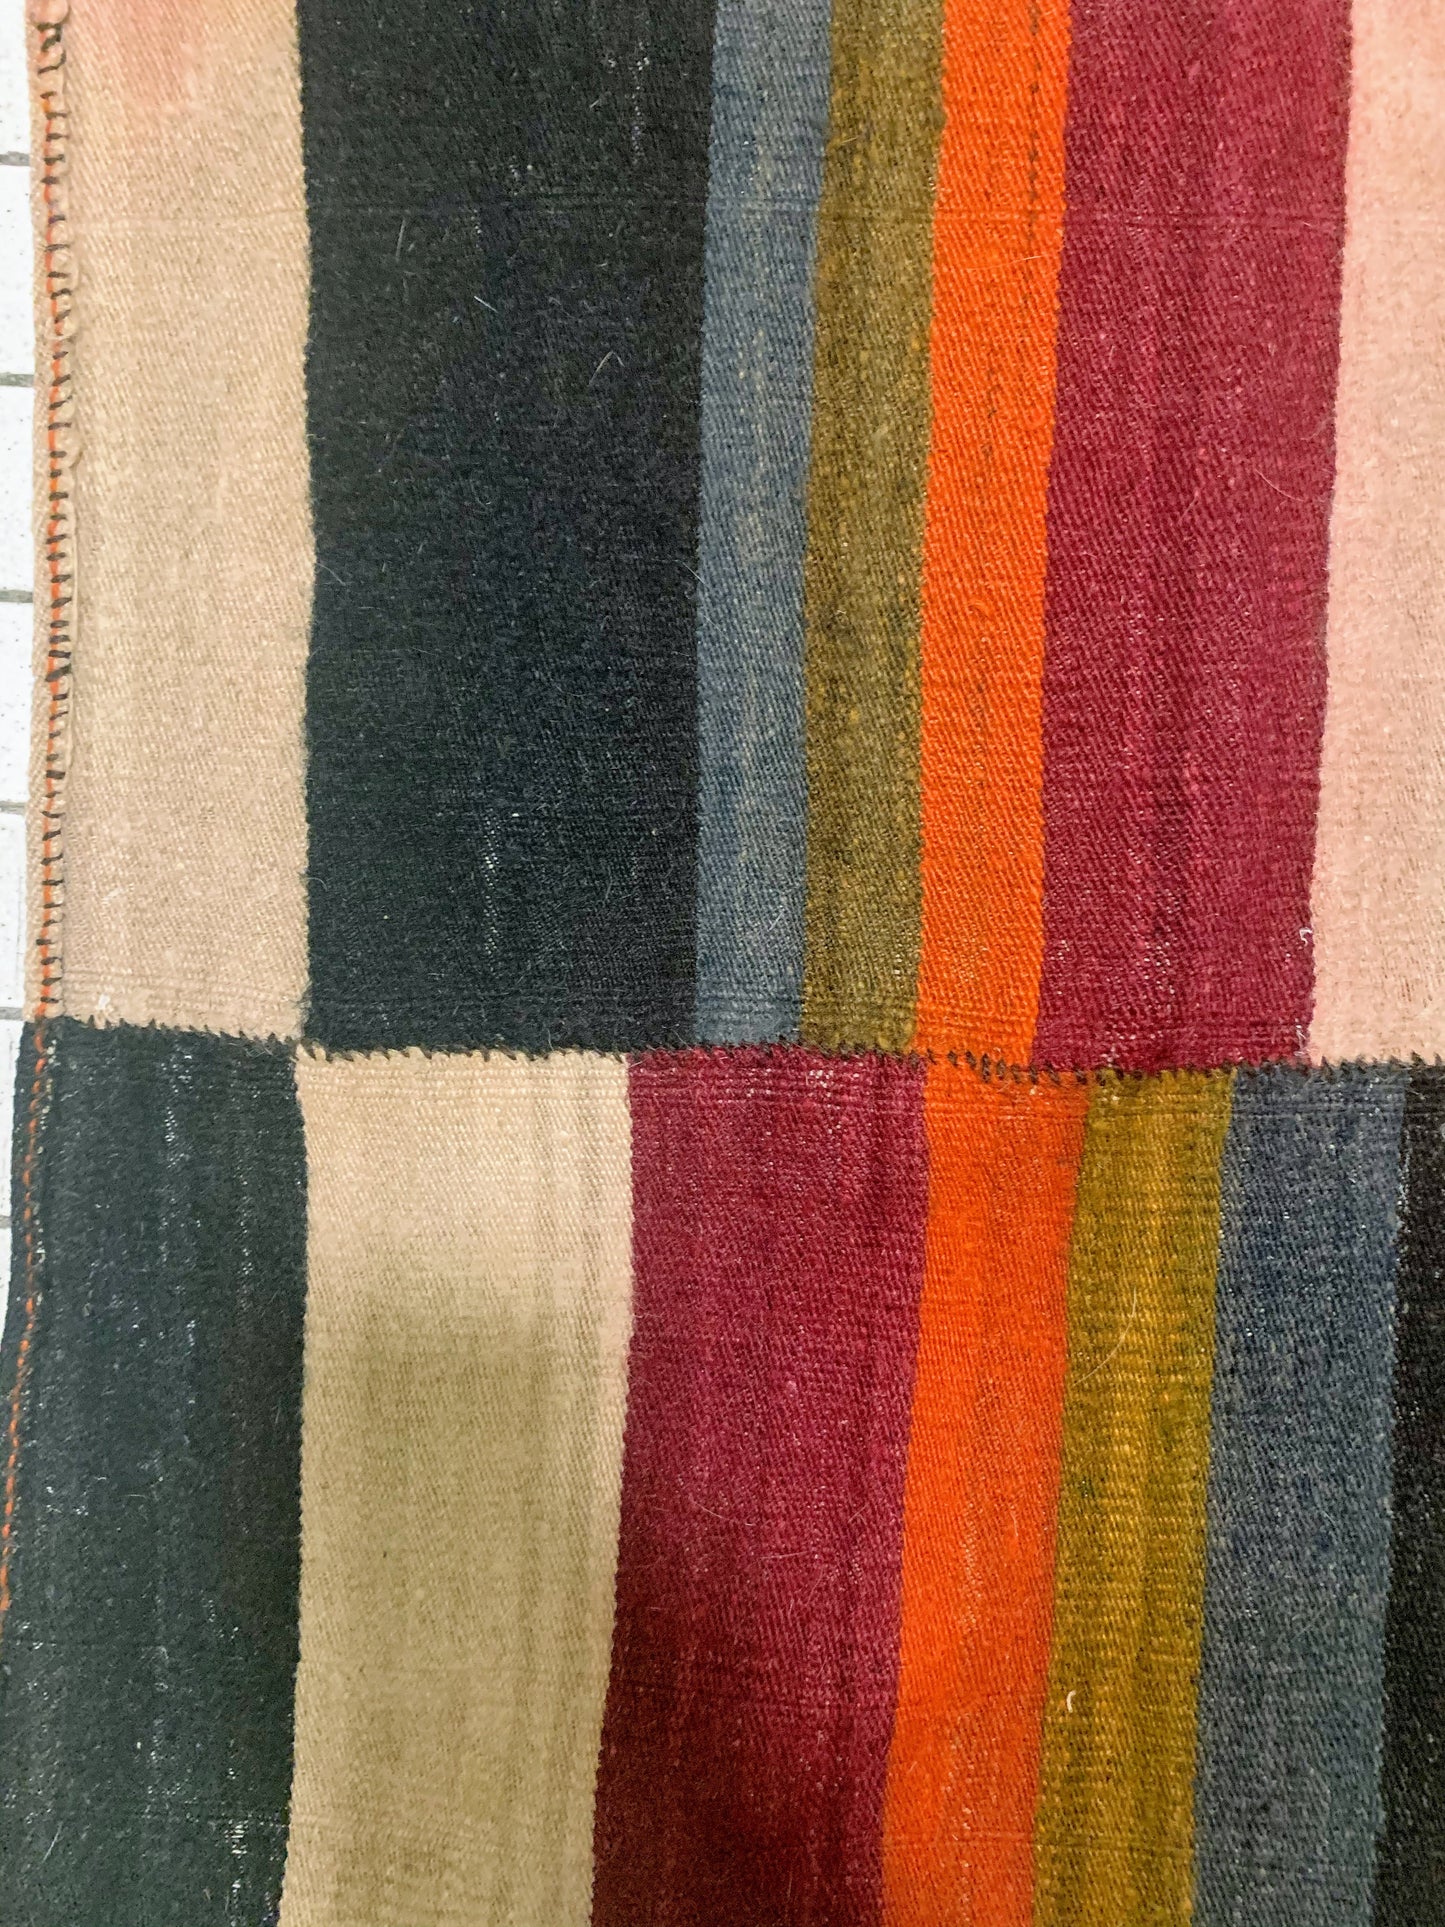 An antique Tibetan wool blanket